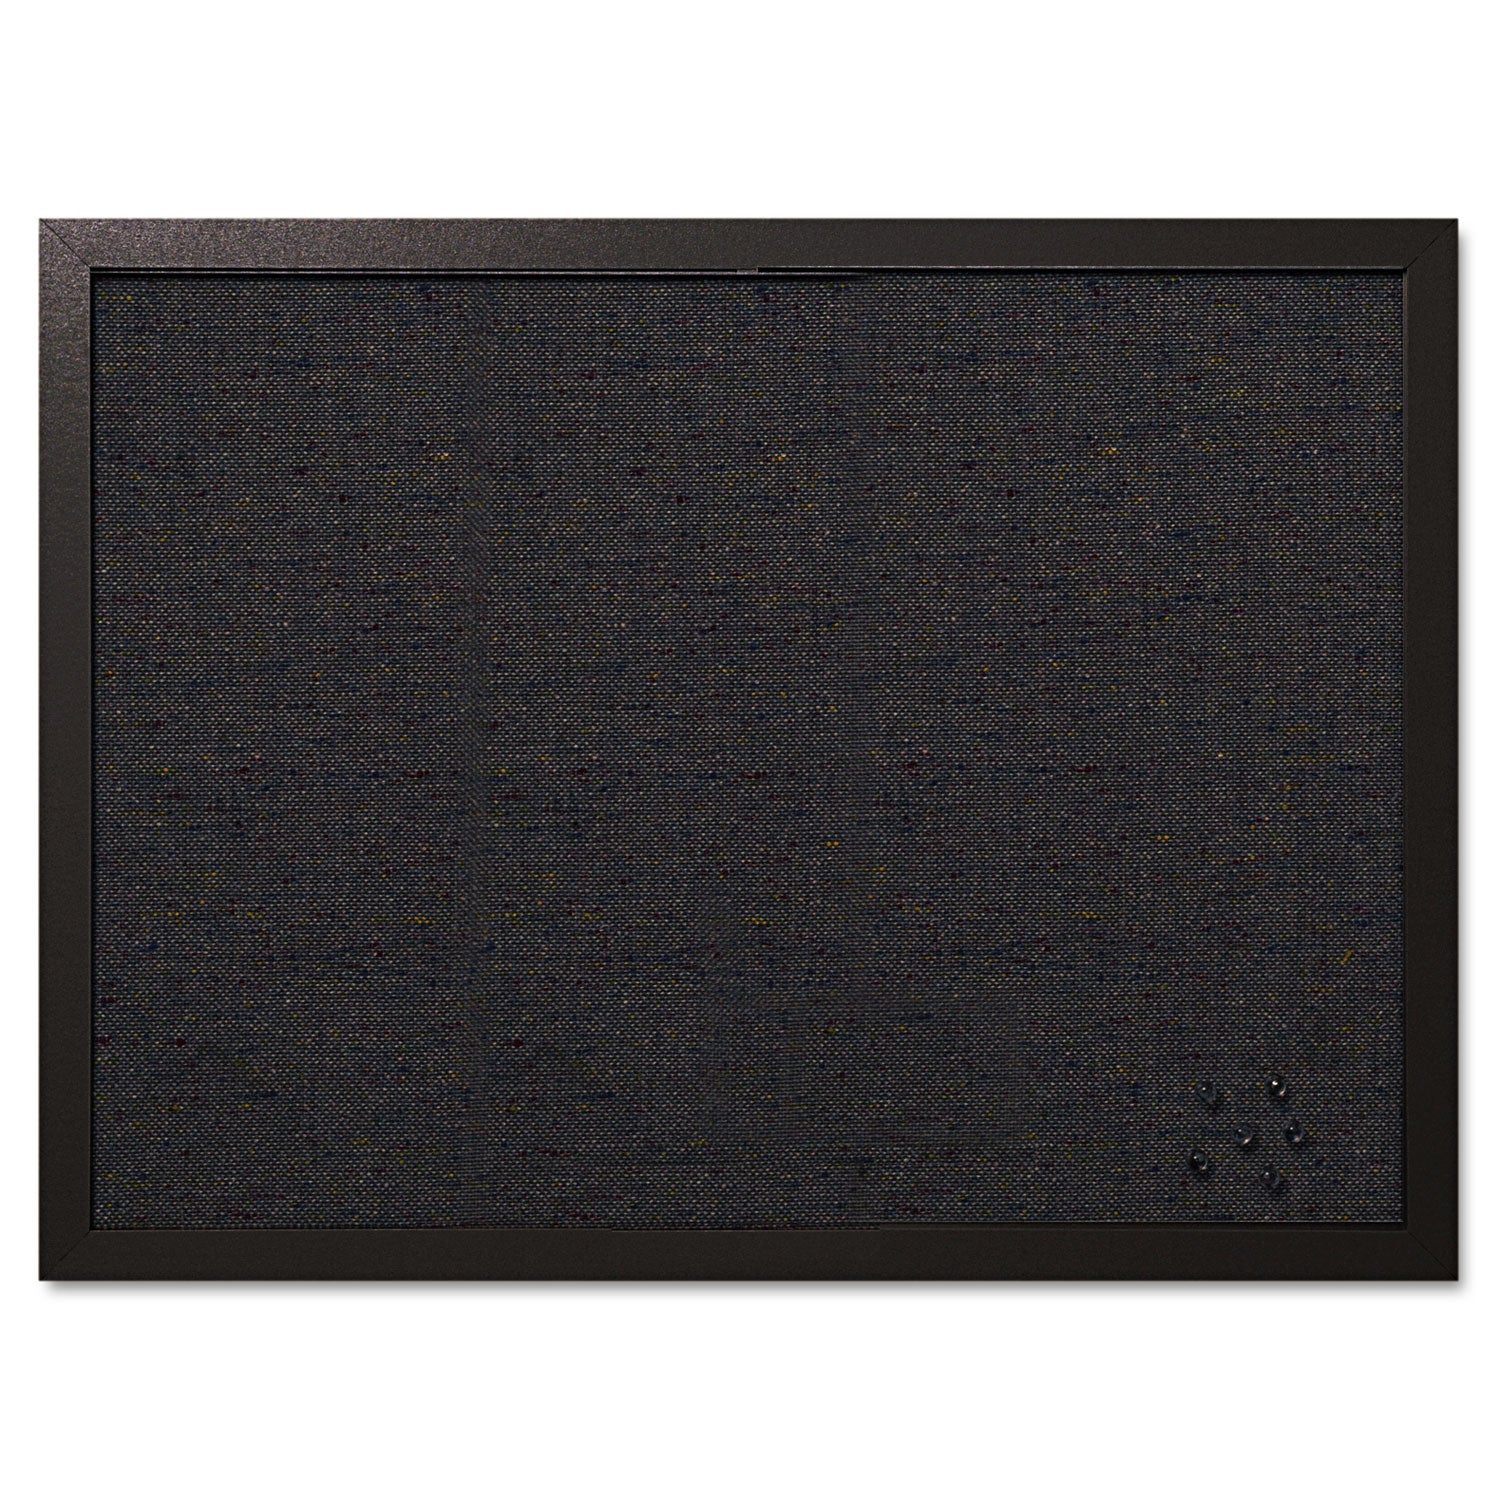 Designer Fabric Bulletin Board, 24 x 18, Black Surface, Black MDF Wood Frame - 